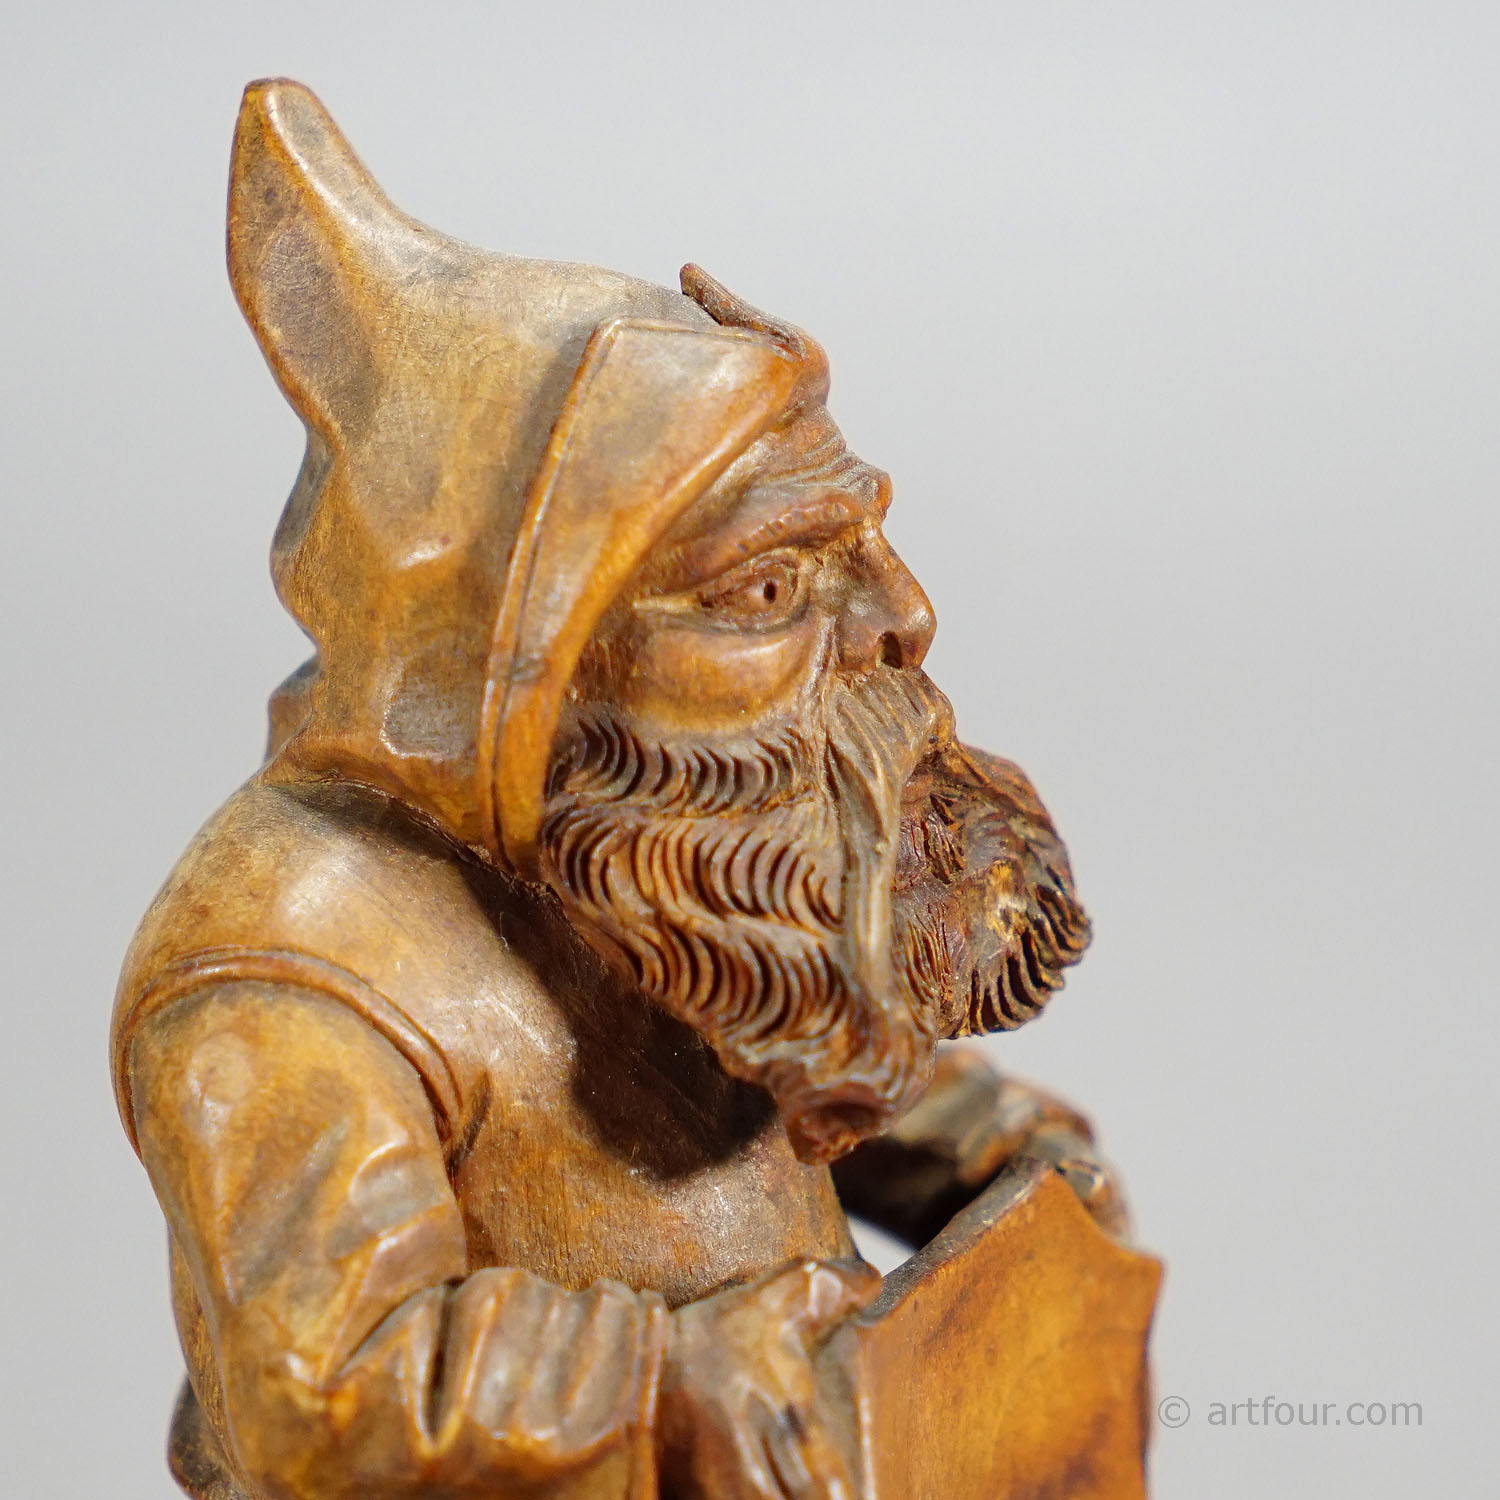 Wooden Carved Black Forest Dwarf Sitting on a Three Stump